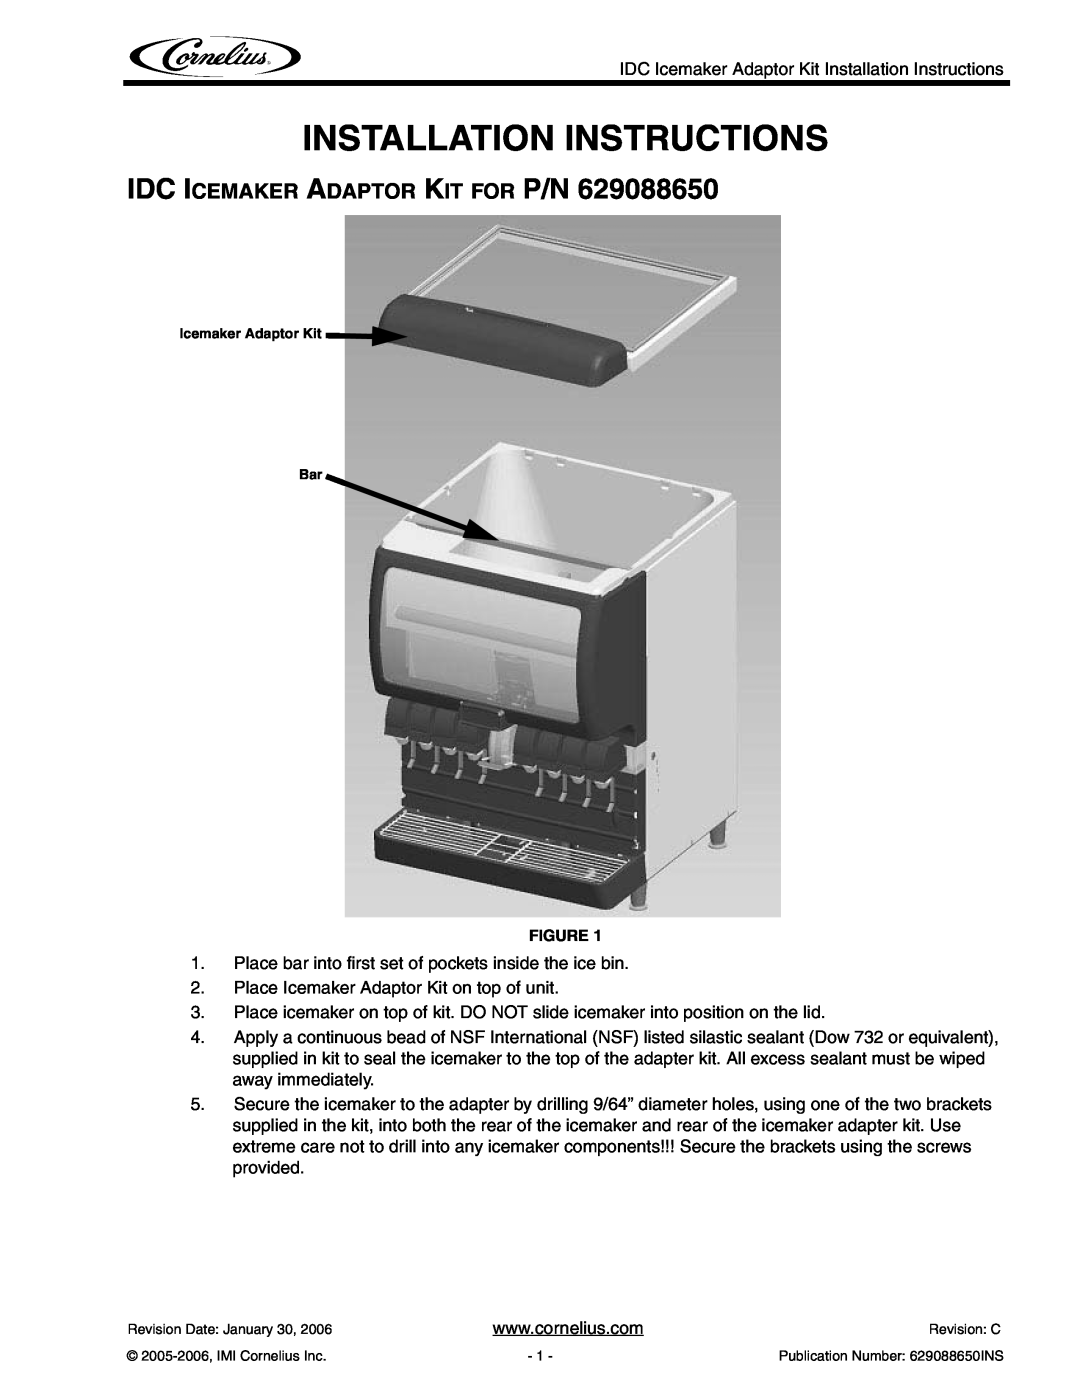 Cornelius P/N 629088650 installation instructions Installation Instructions, Idc Icemaker Adaptor Kit For P/N 